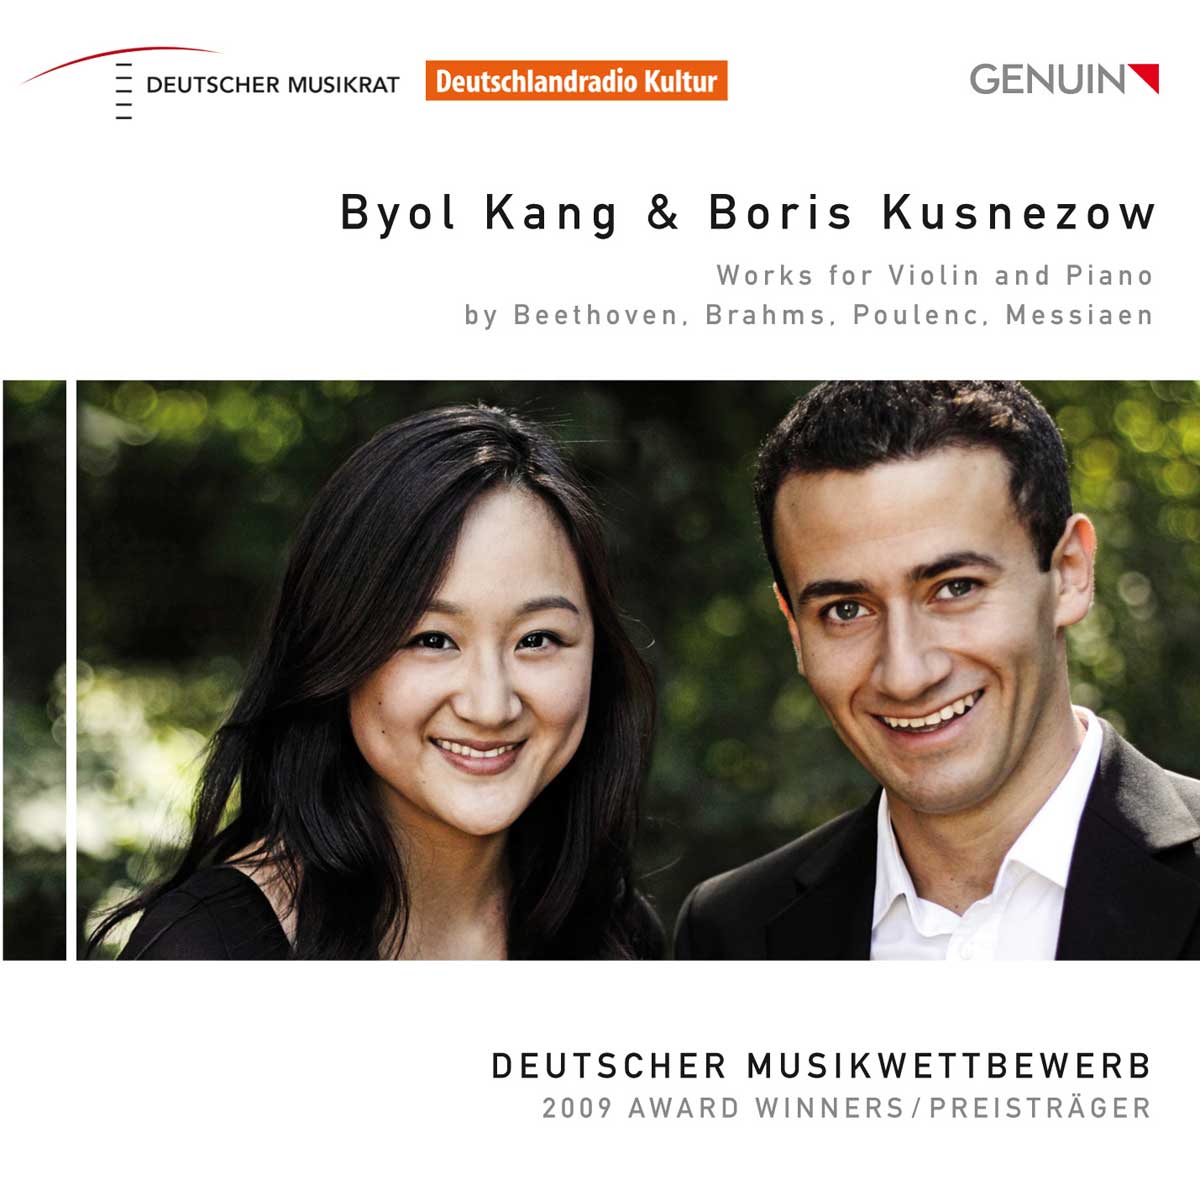 CD album cover 'Byol Kang & Boris Kusnezow' (GEN 10175 ) with Byol Kang, Boris Kusnezow